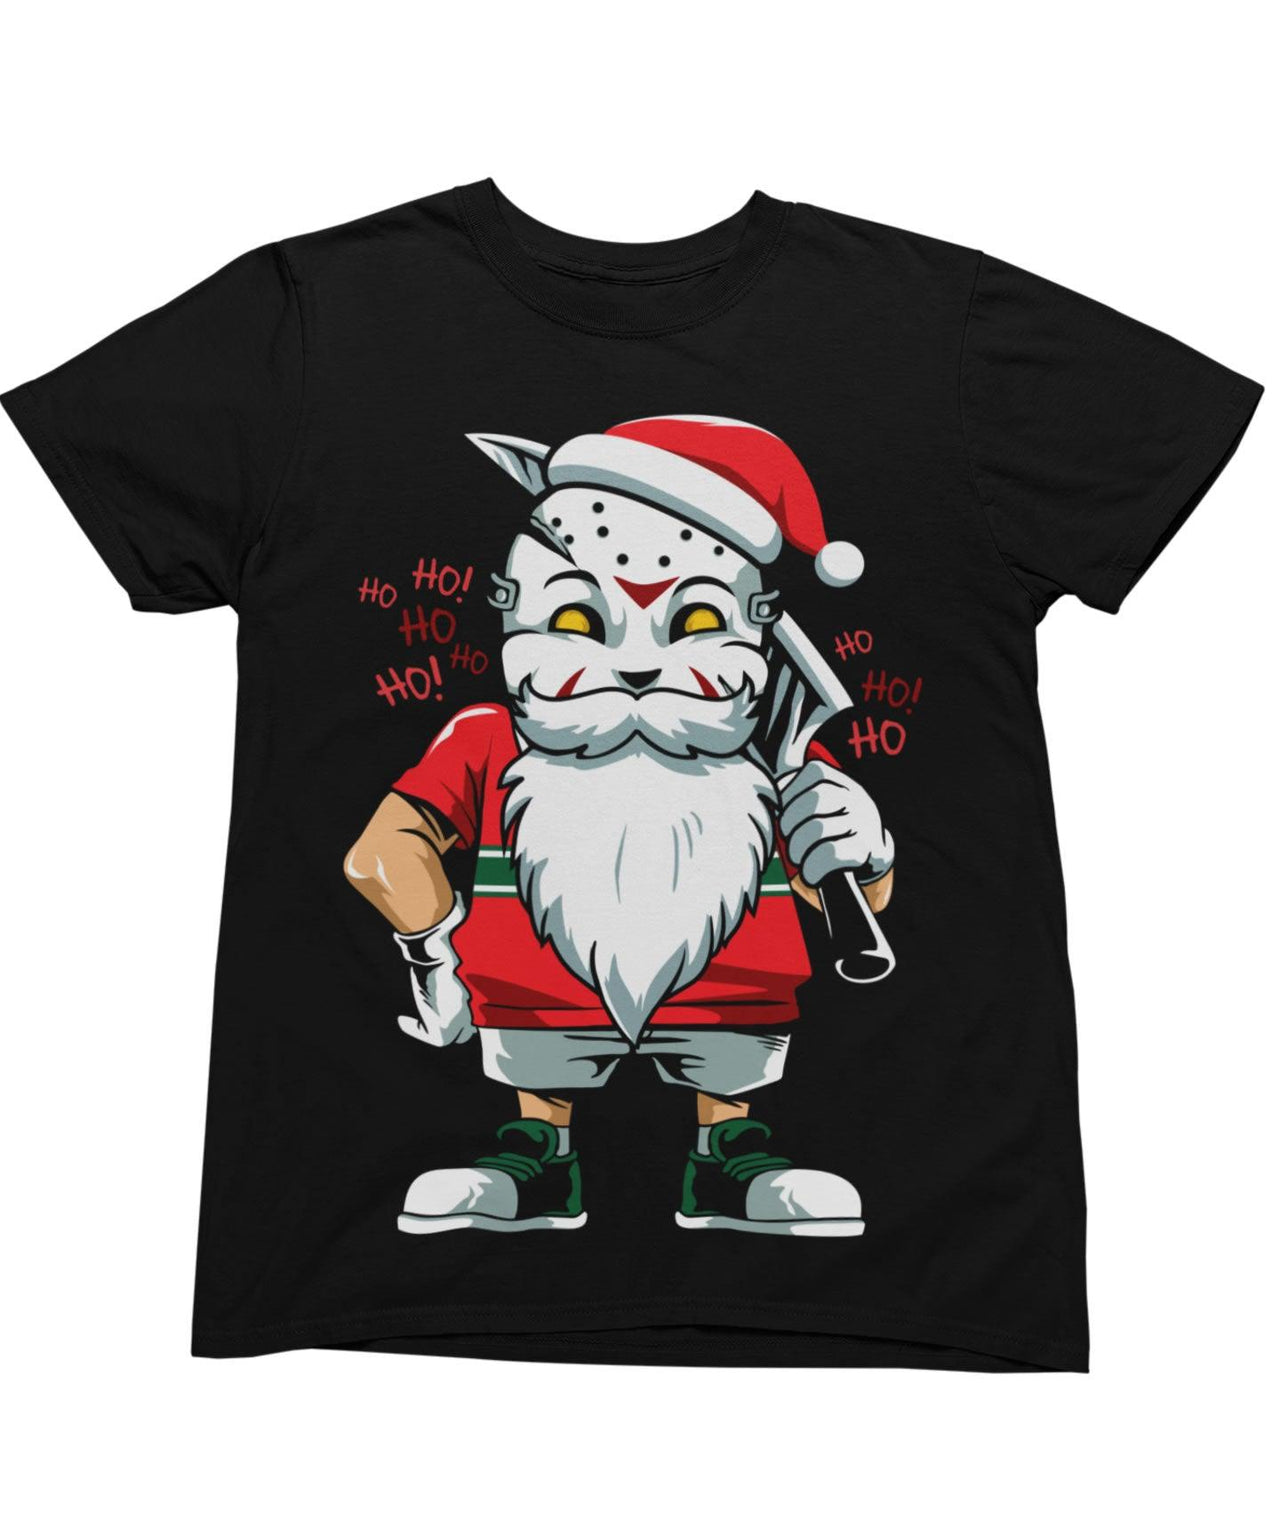 Another Evil Santa Unisex Christmas Graphic T-Shirt For Men 8Ball